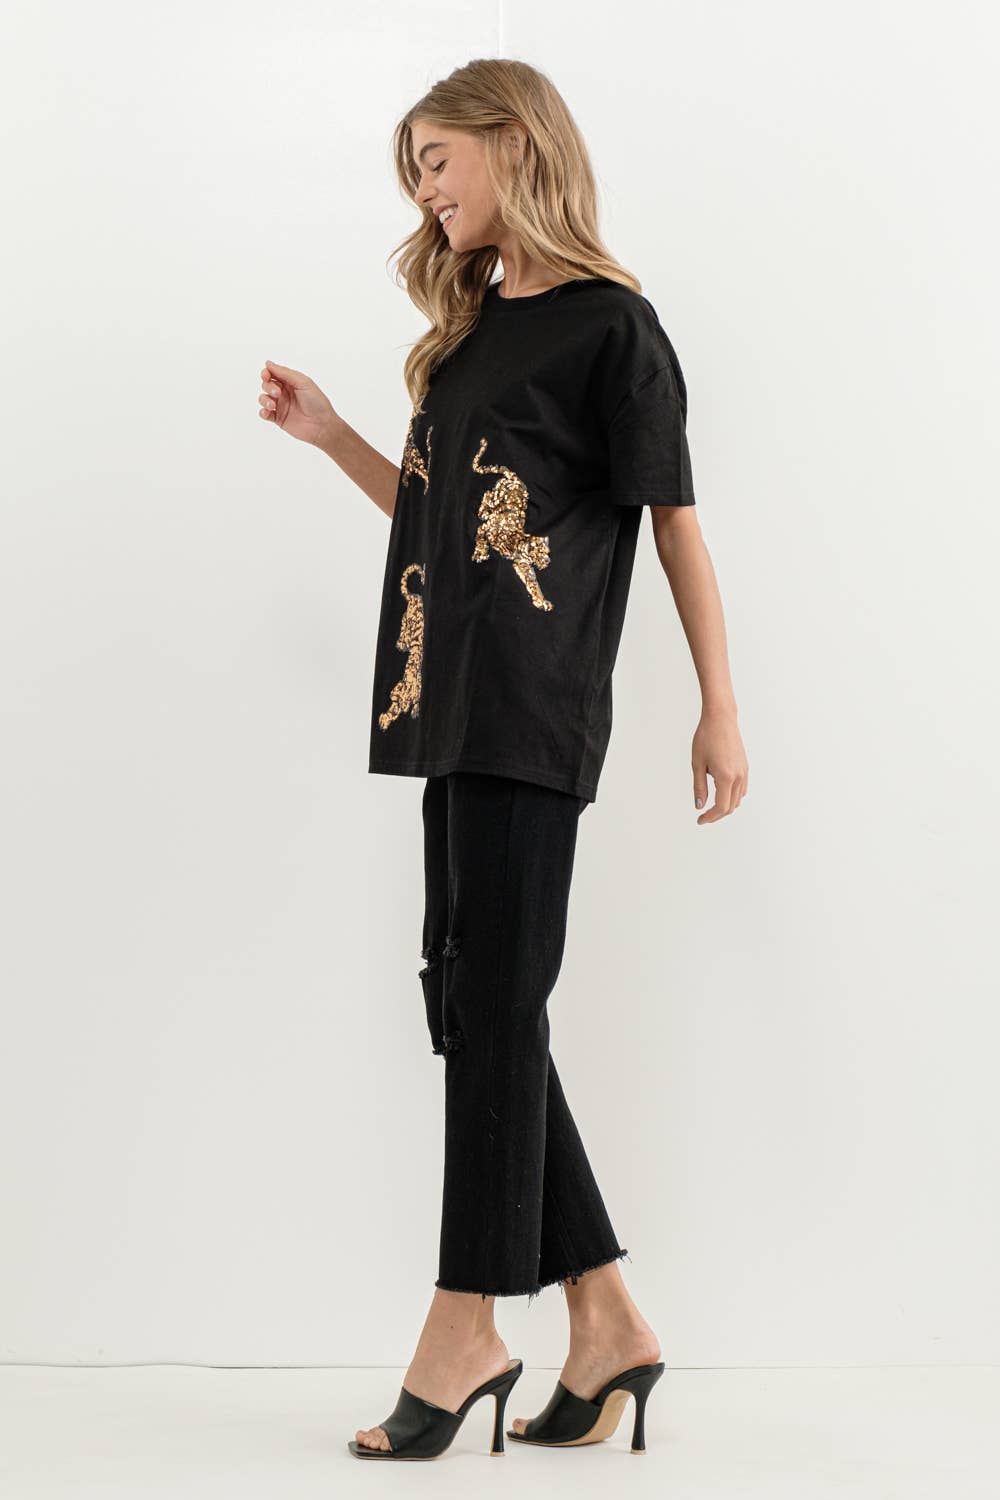 Embellished Sequin Tiger Graphic T Shirt